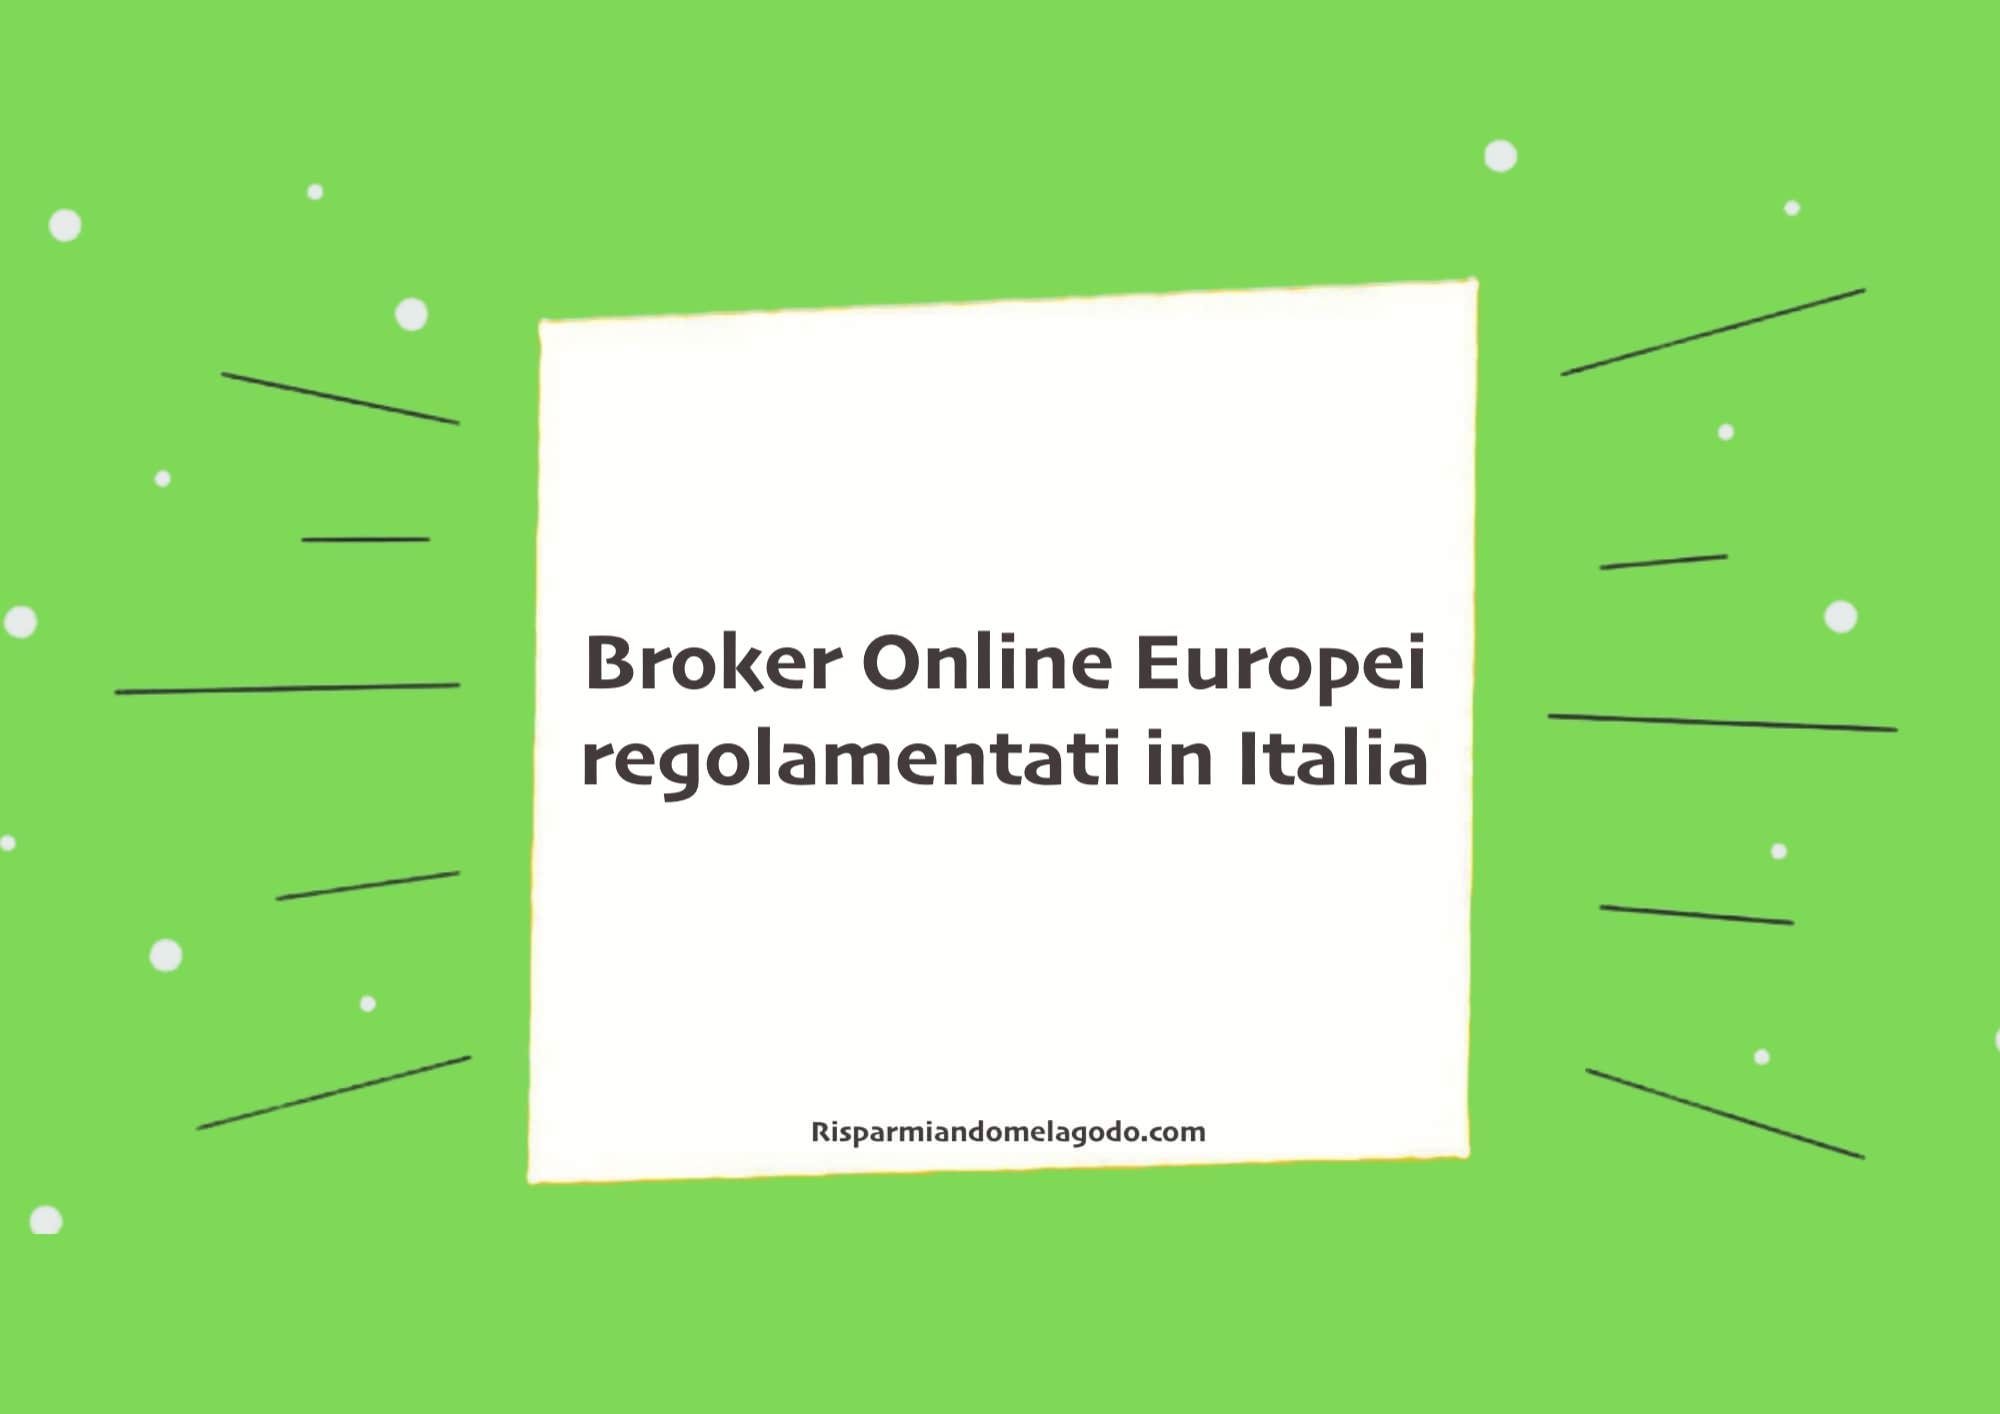 Broker Online Europei regolamentati in Italia